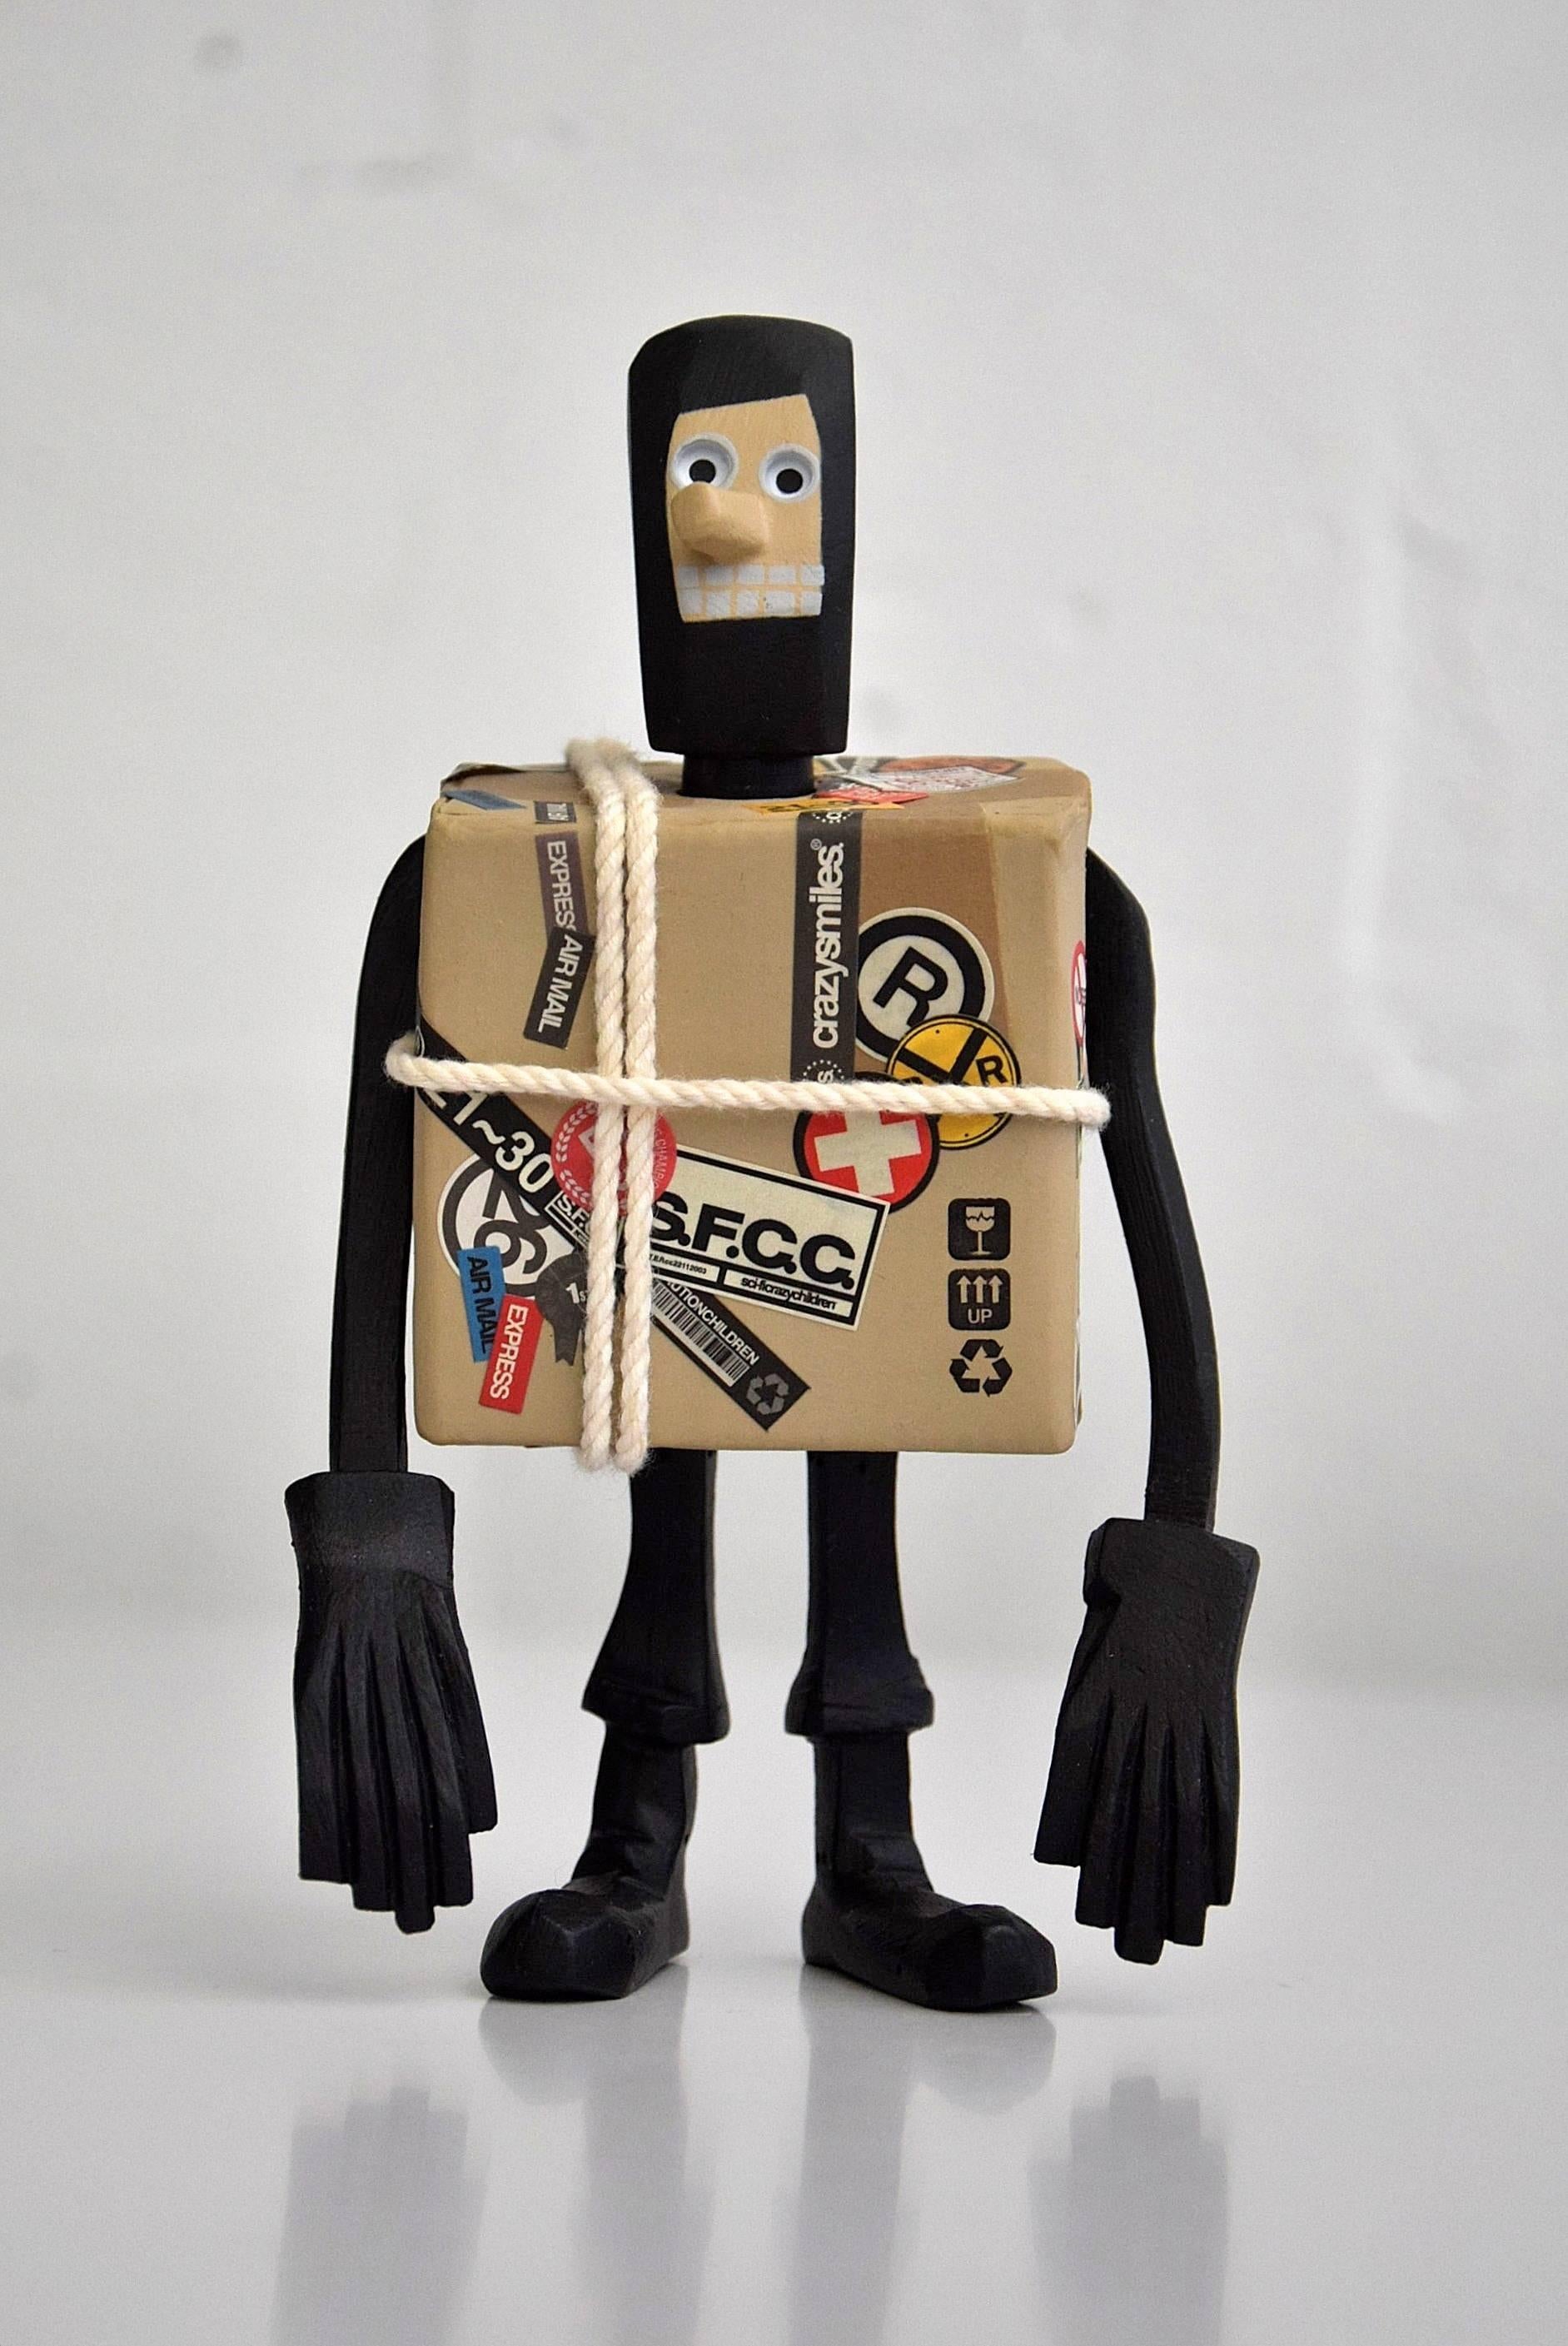 Contemporary Designer Toy R.i.C.H.a.R.D. by Michael Lau, 2003 For Sale